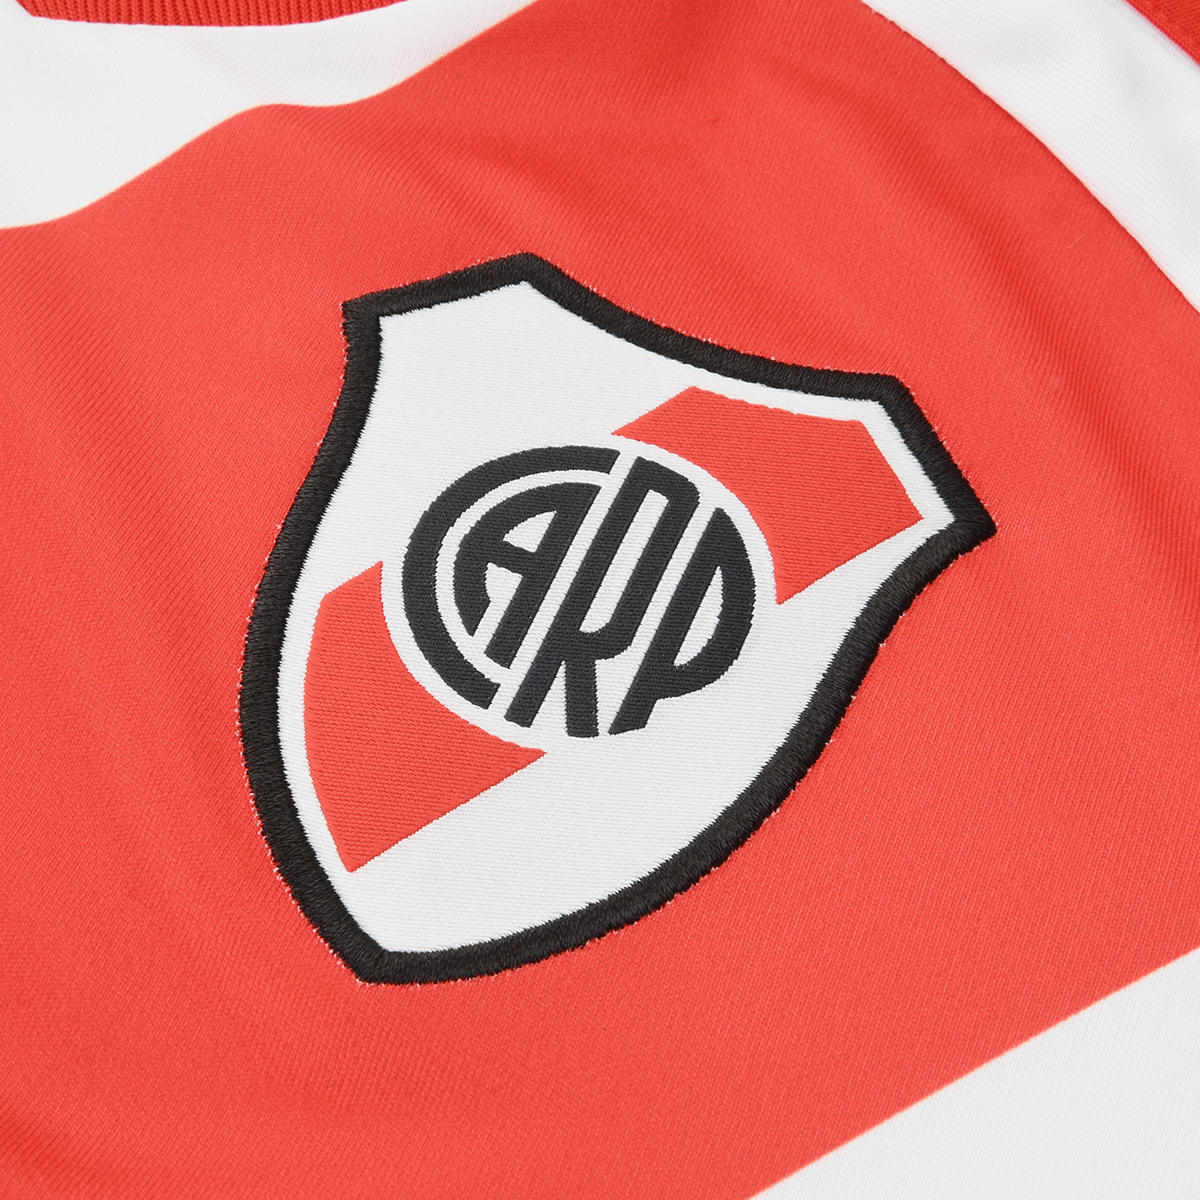 Camiseta adidas River Plate Titular 23/24 para Niños,  image number null